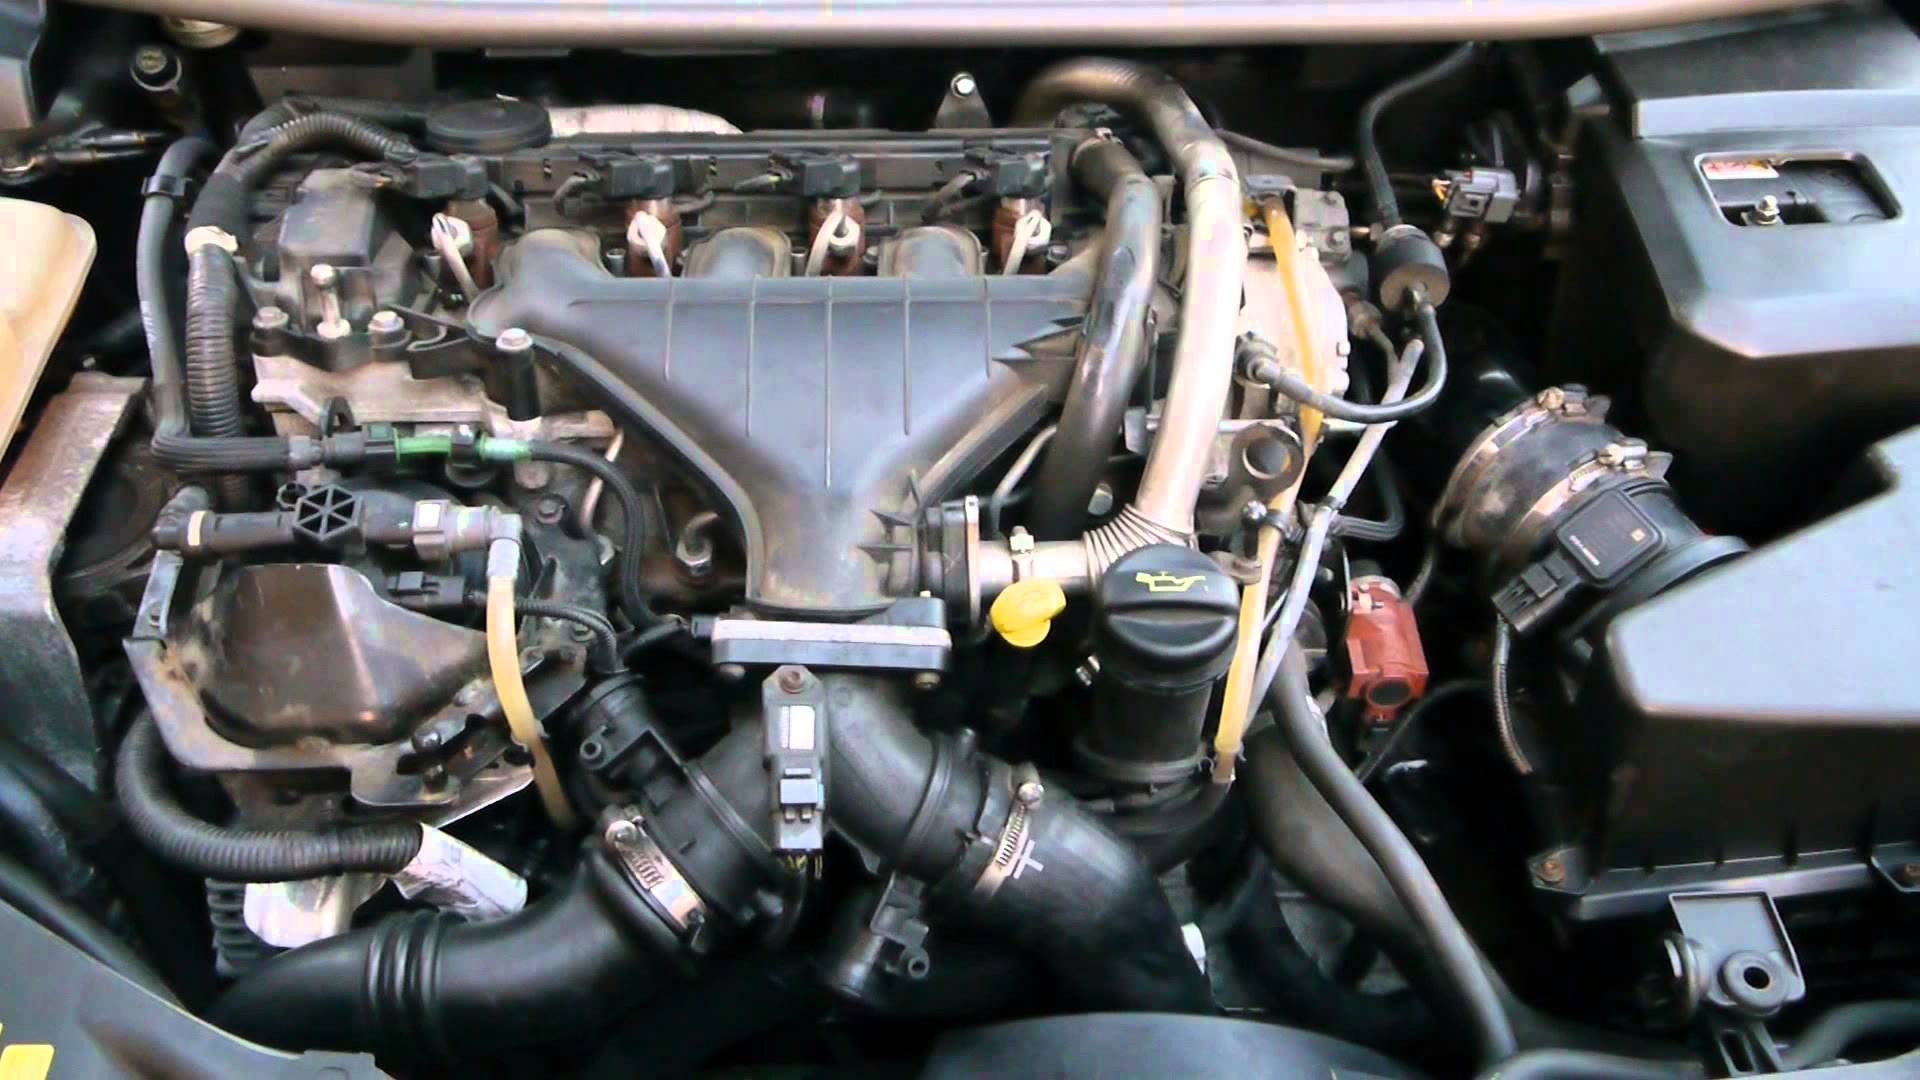 Diagram Of Car Engine Problems with Volvo V50 Engine False Start but Runs Ok 14 11 2012 Of Diagram Of Car Engine